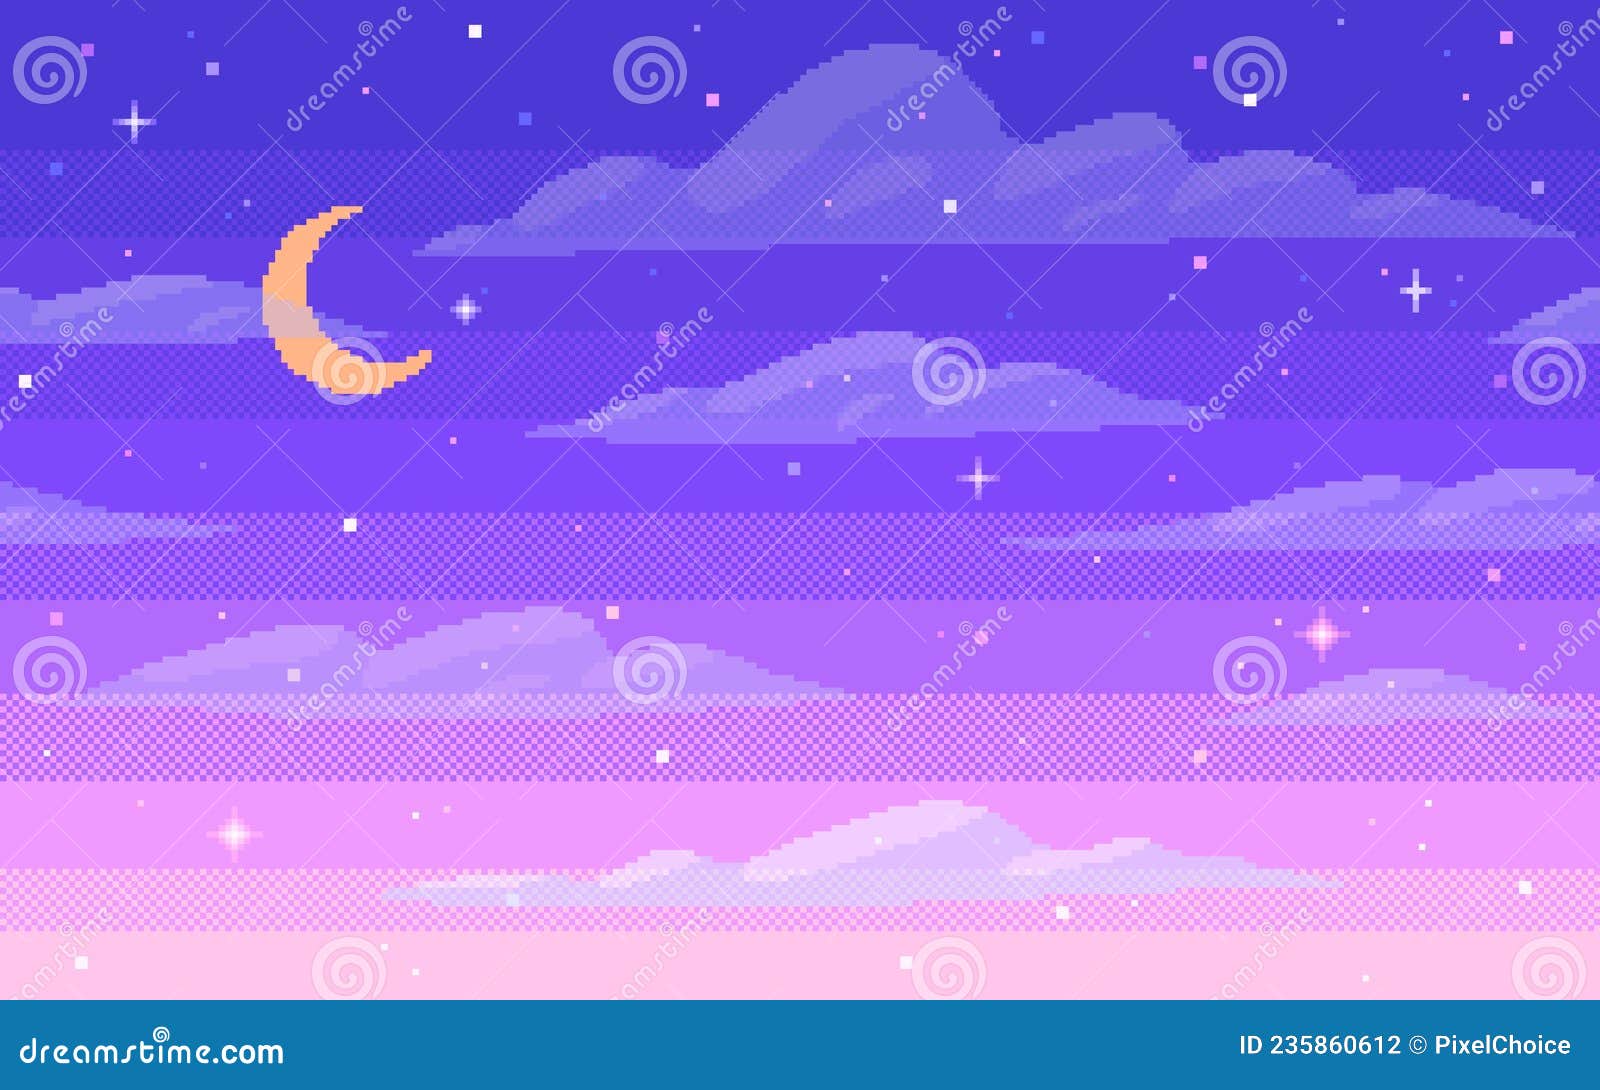 Pixel Art Starry Seamless Background. Night Sky in 8 Bit Style ...